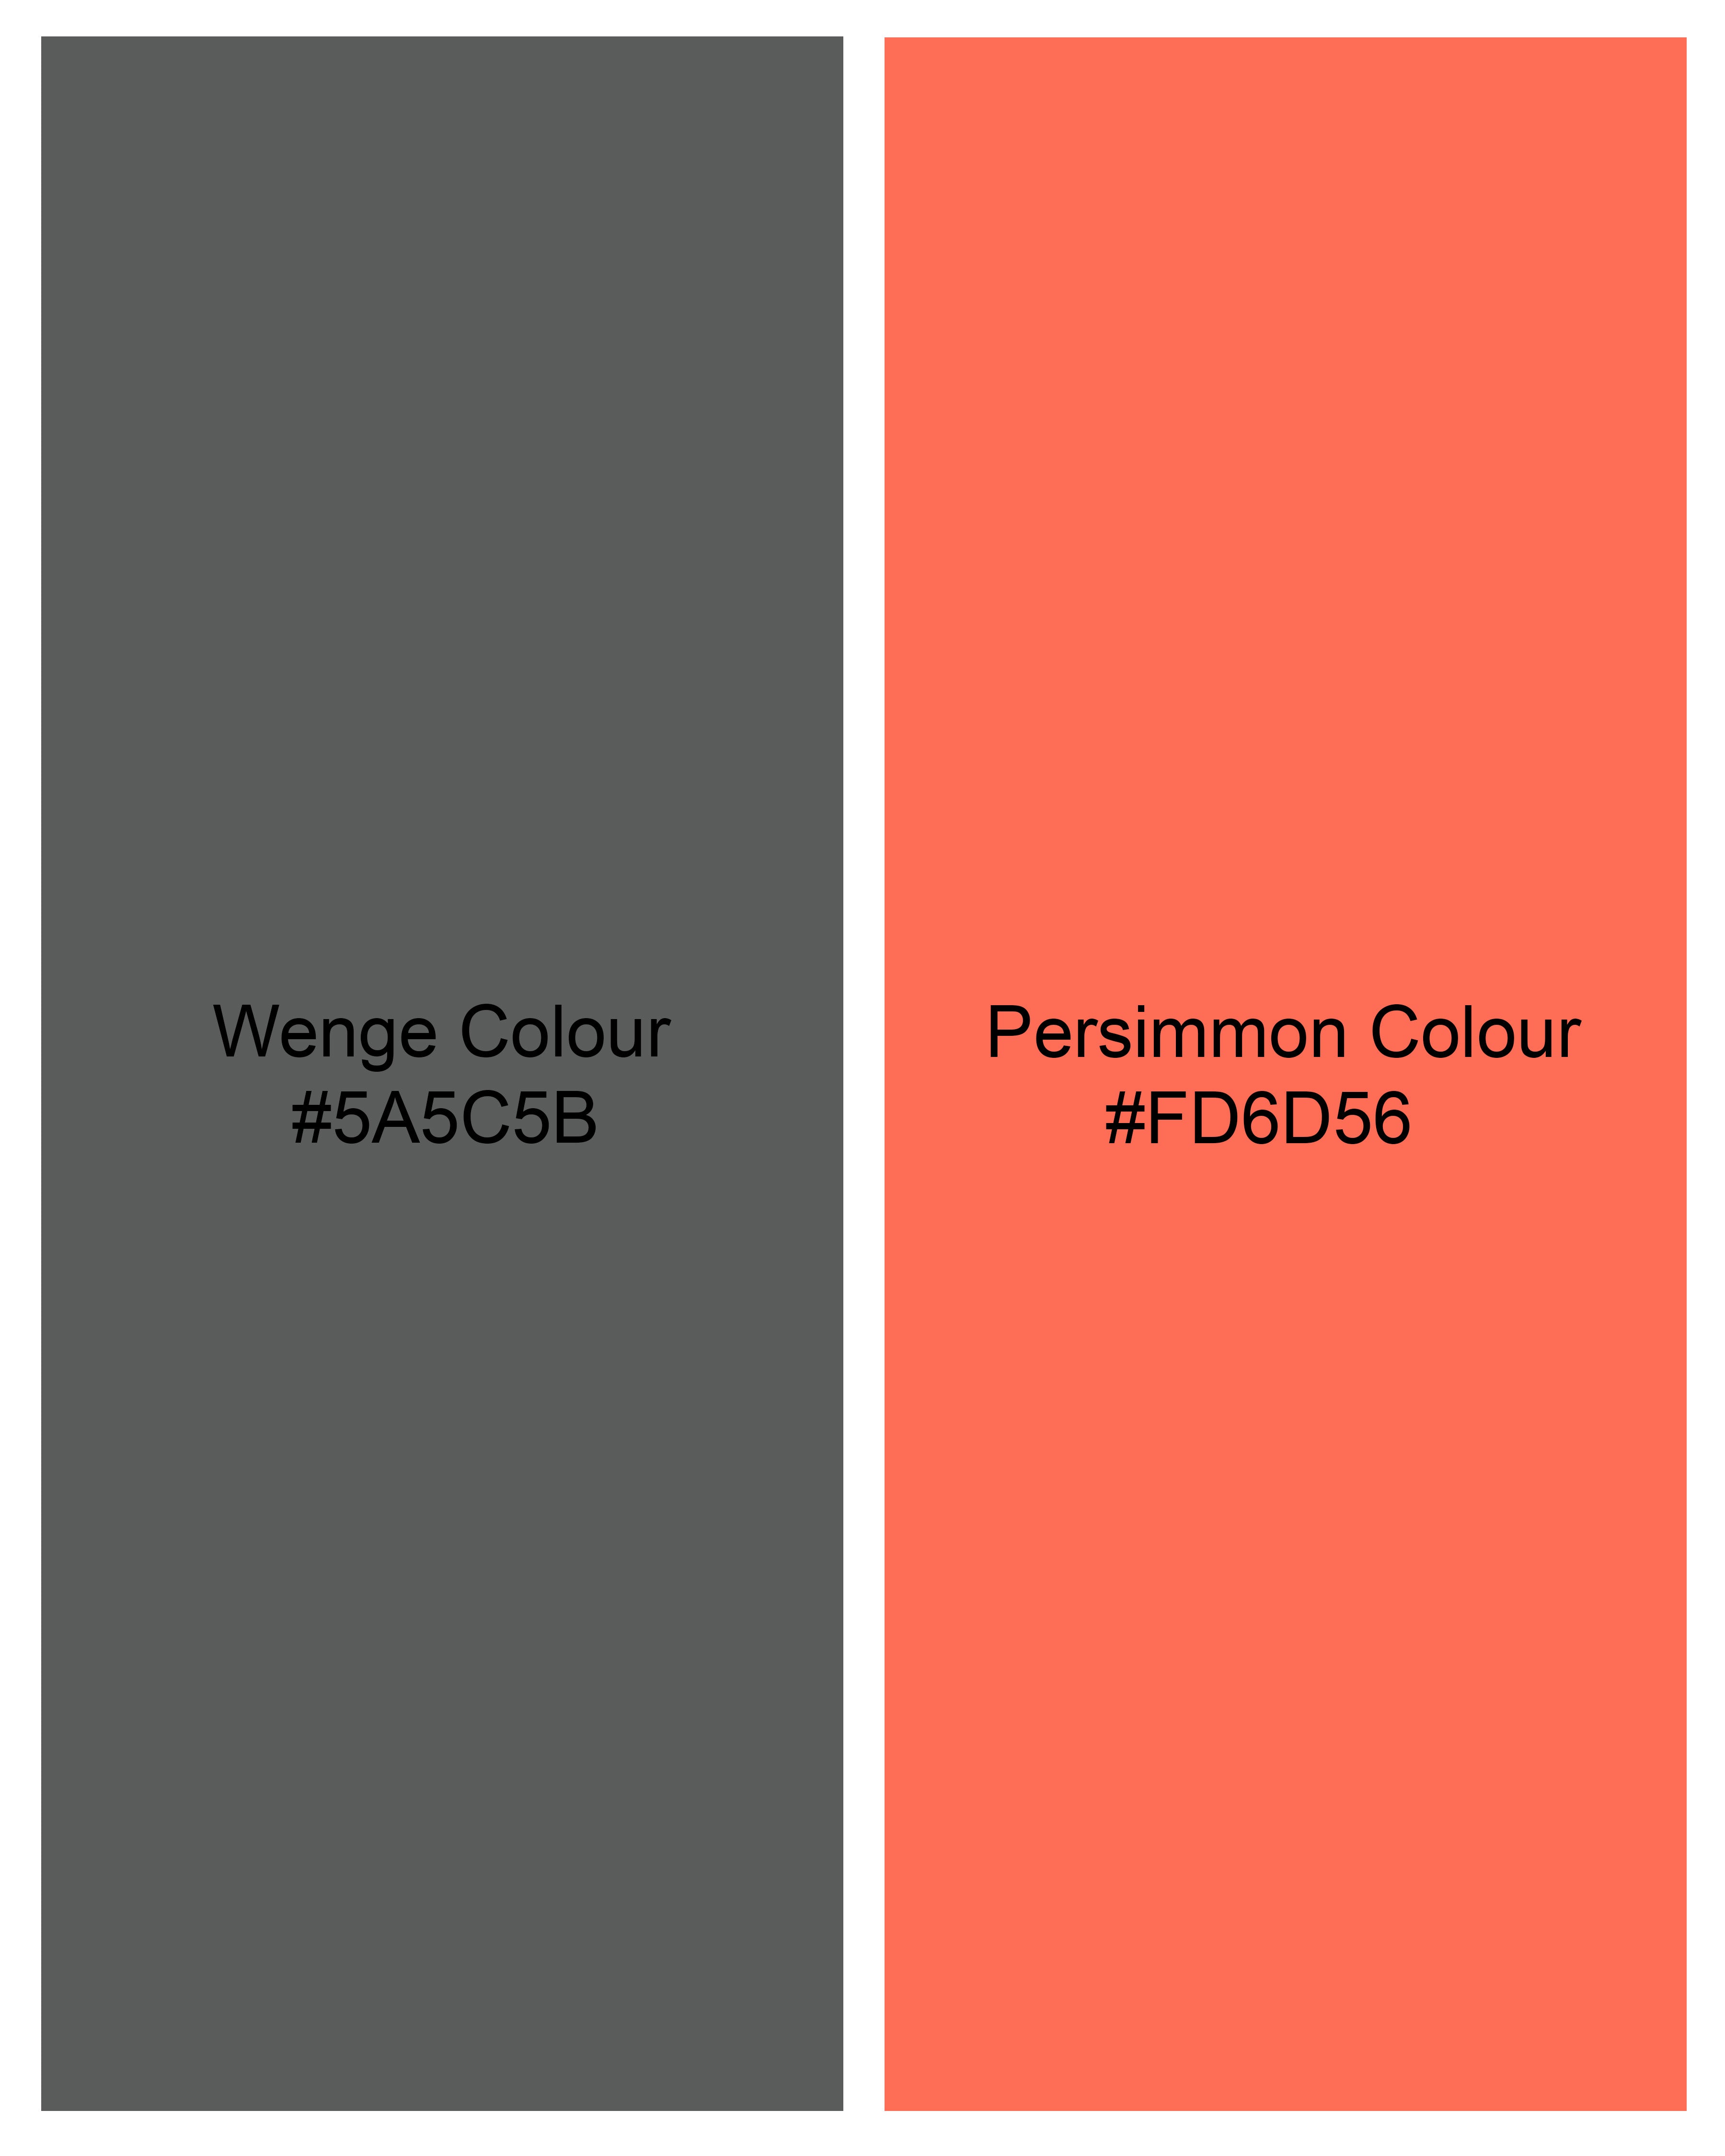 Wenge Gray and Persimmon Red Organic Cotton T-shirt TS832-S, TS832-M, TS832-L, TS832-XL, TS832-XXL